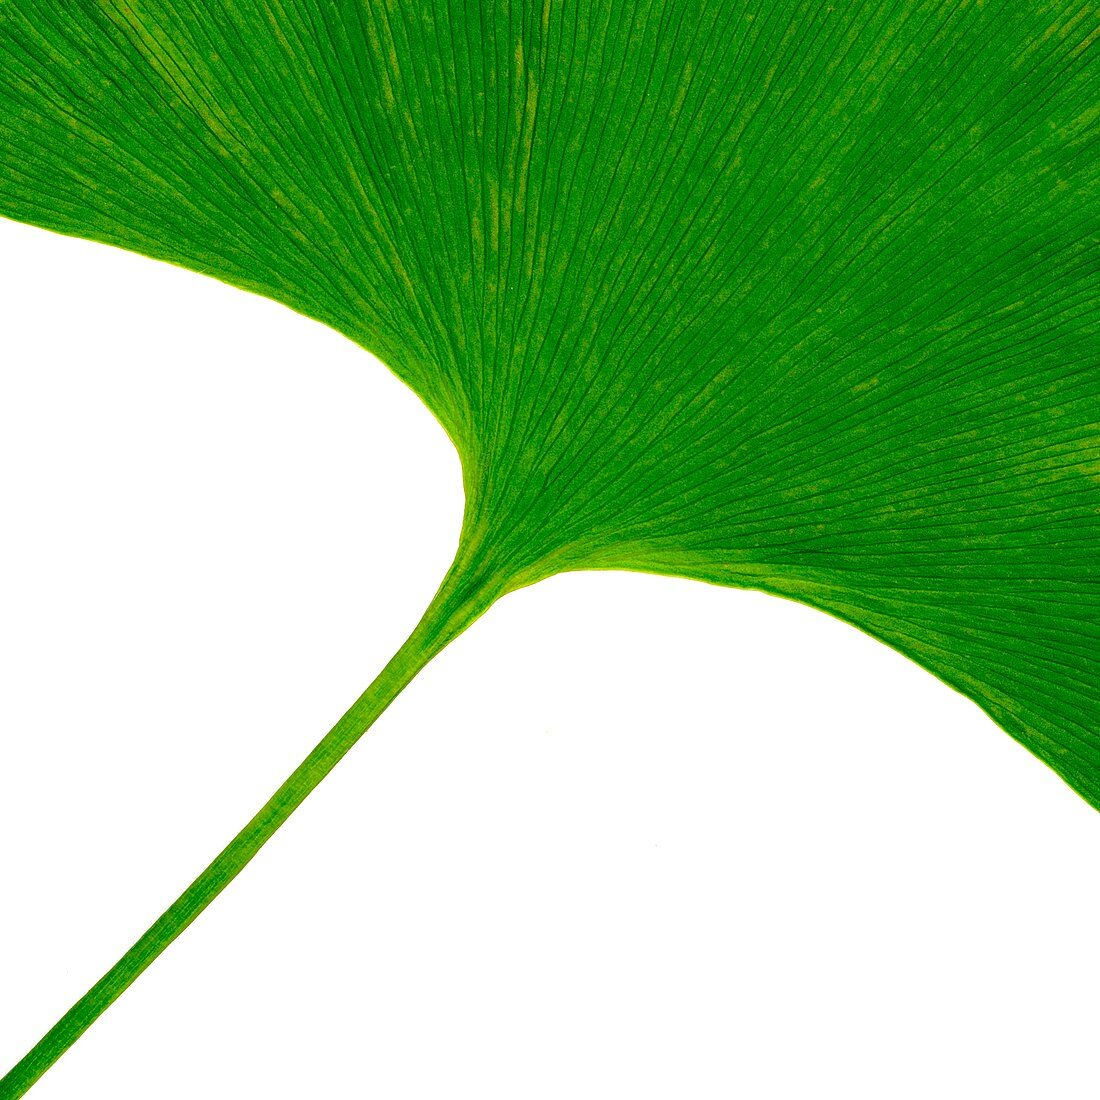 Ginkgo biloba leaf